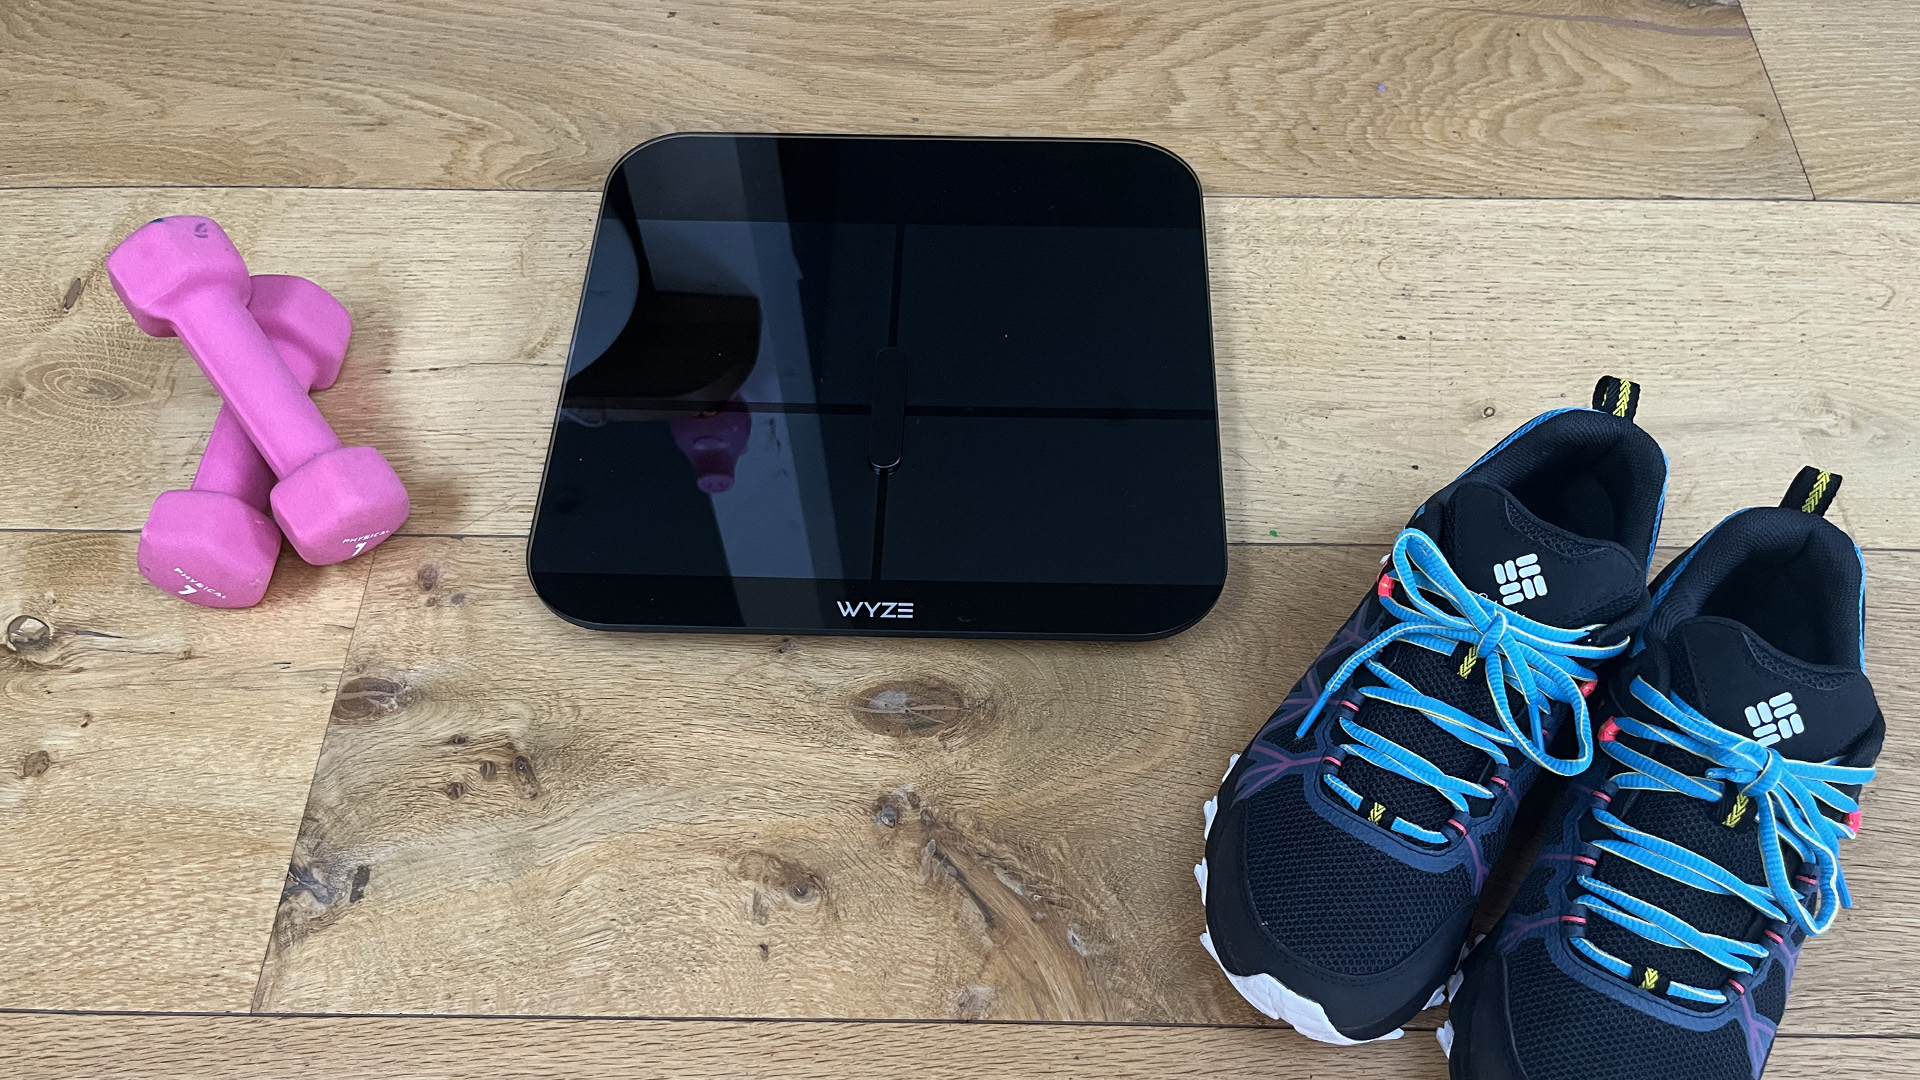 Wyze Smart Scale x for Body Weight, Digital Bathroom Scale for BMI, Body, Black